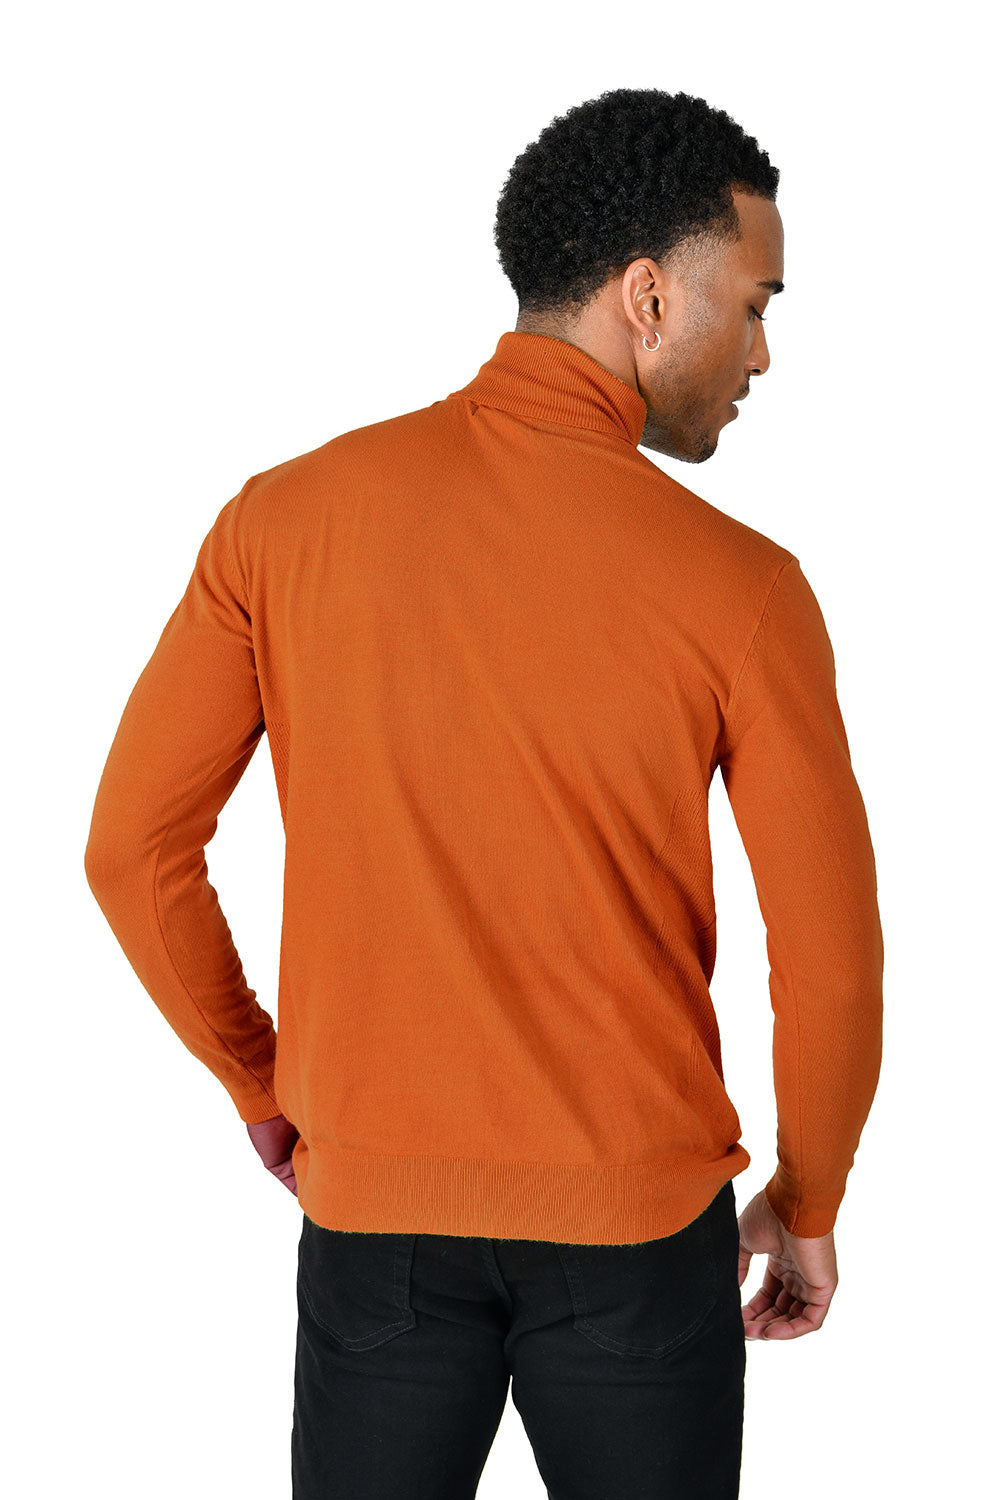 Men's Turtleneck Ribbed Solid Color Basic Sweater LS2100 Rust